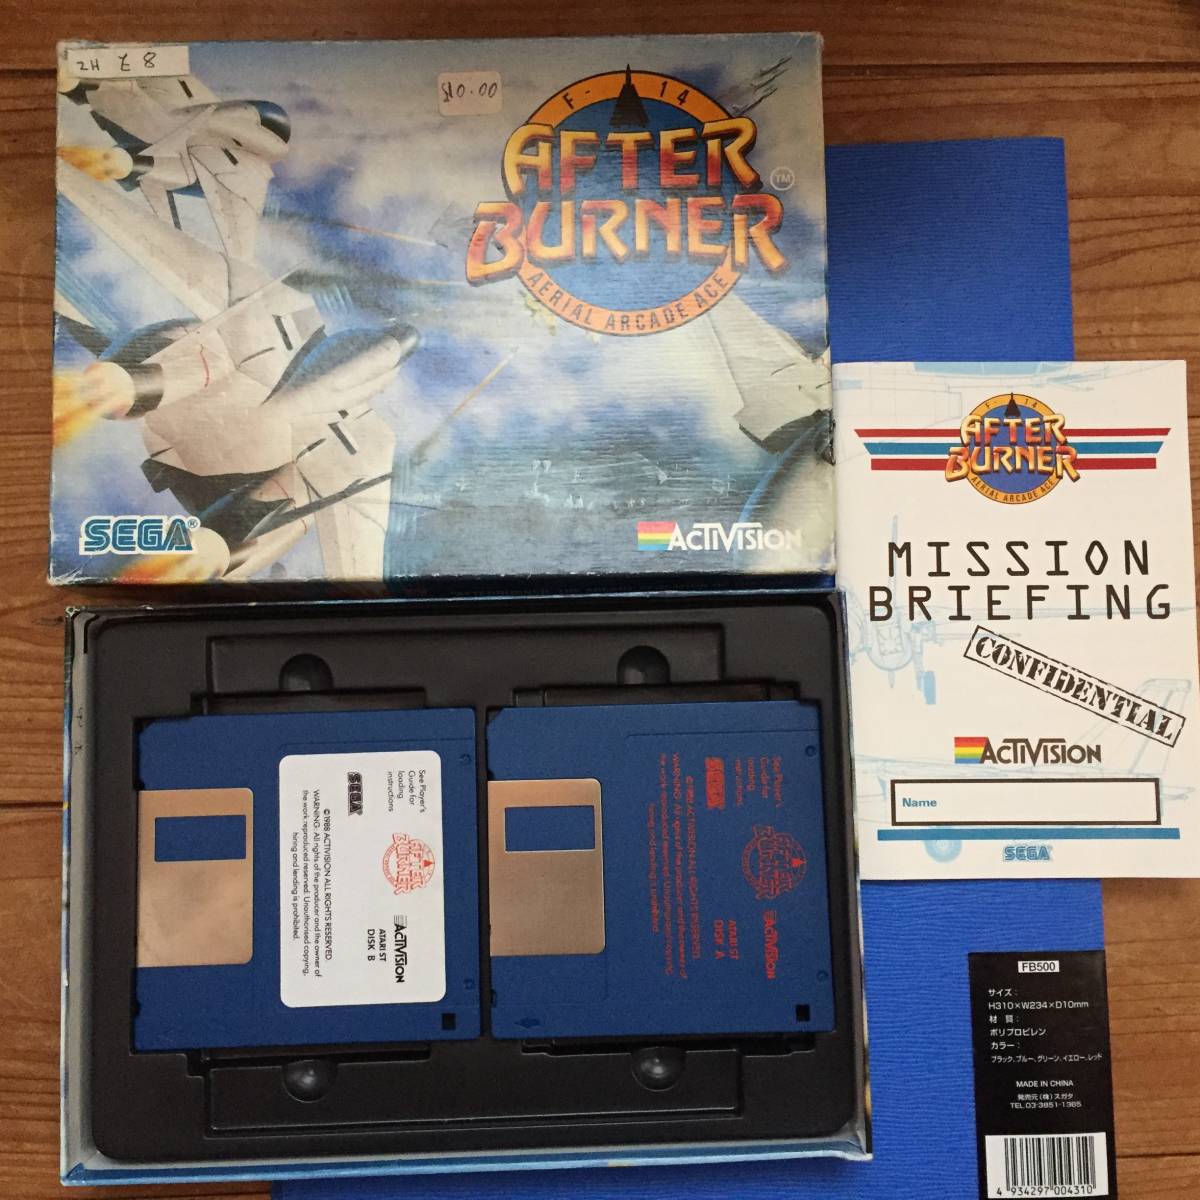 Atari ST　アフターバーナー　AfterBurner　セガ　Activision　フロッピーディスク　レトロゲーム　アクション　アタリ　戦闘機ゲーム_画像1